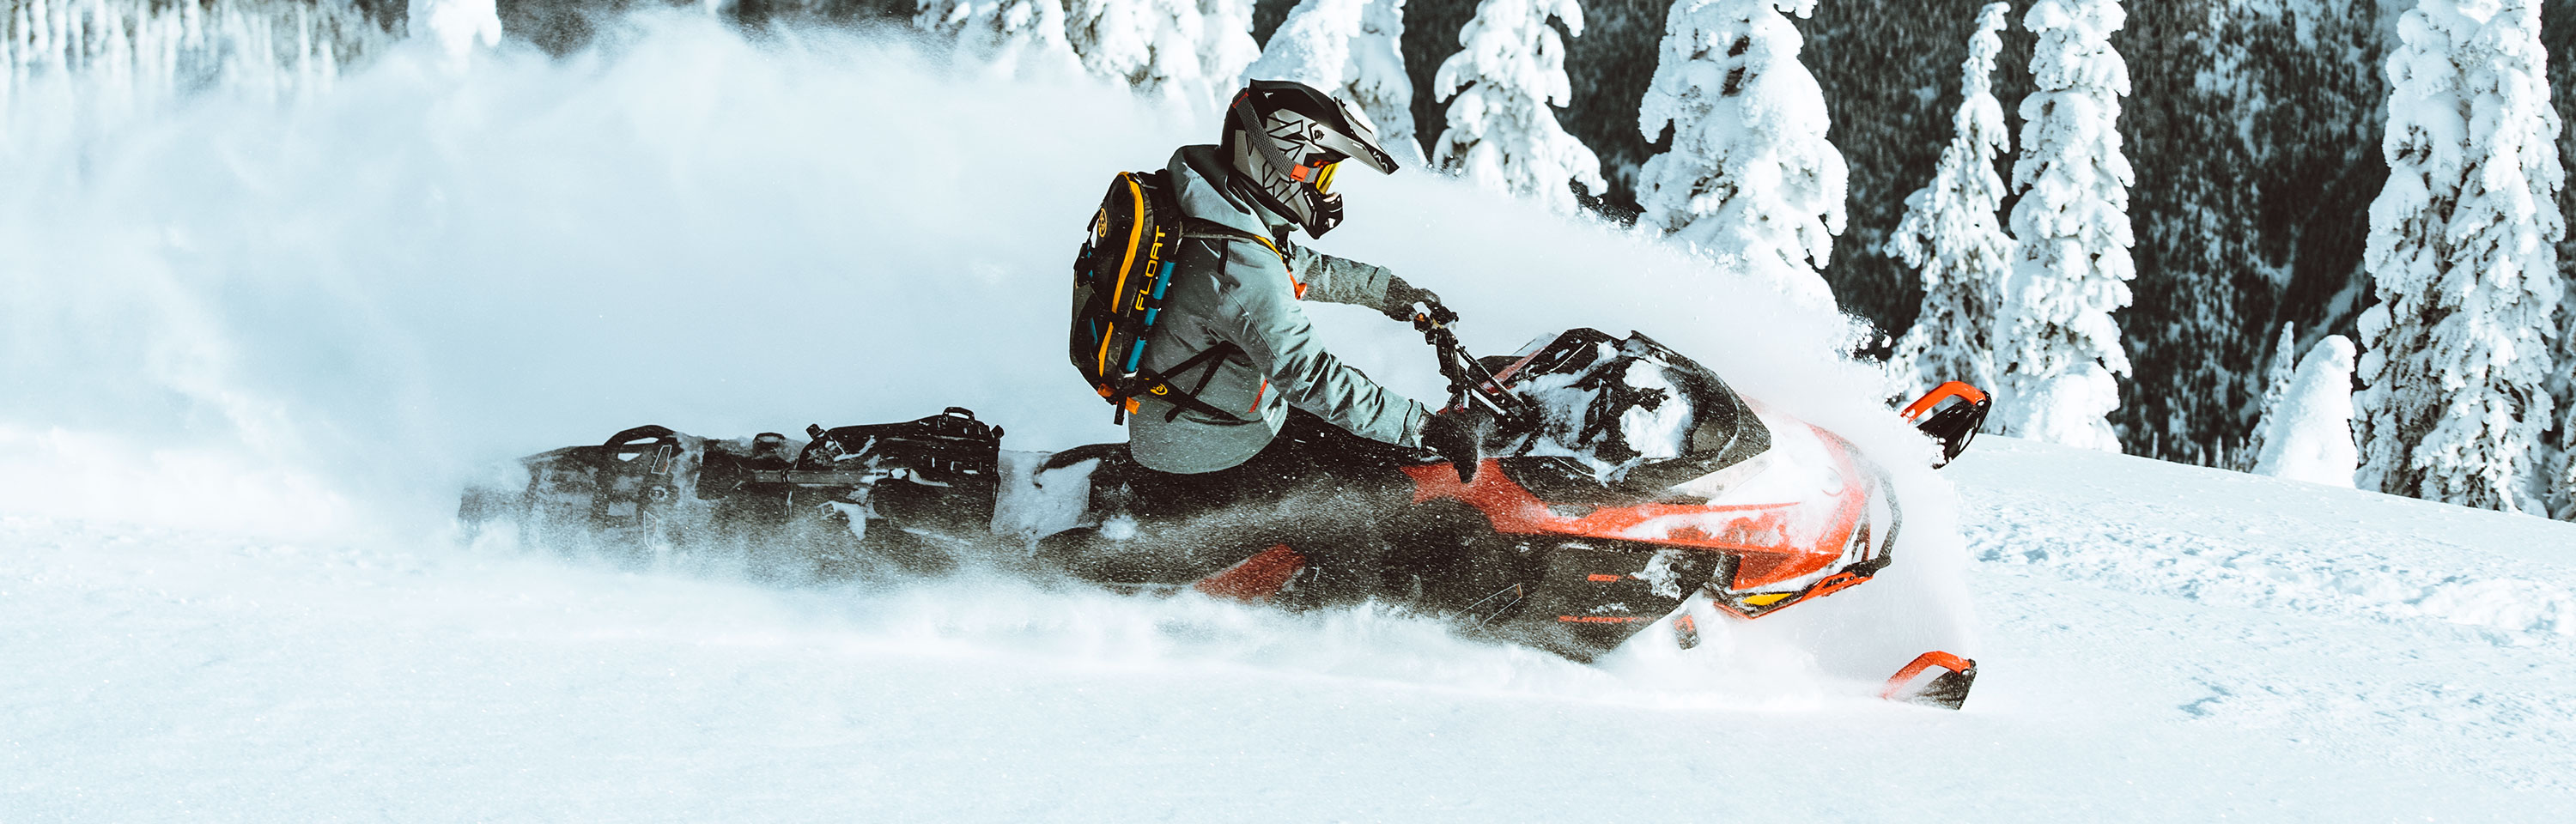 Man riding a snowmobile with High Tech Snowmobile Riding Gear